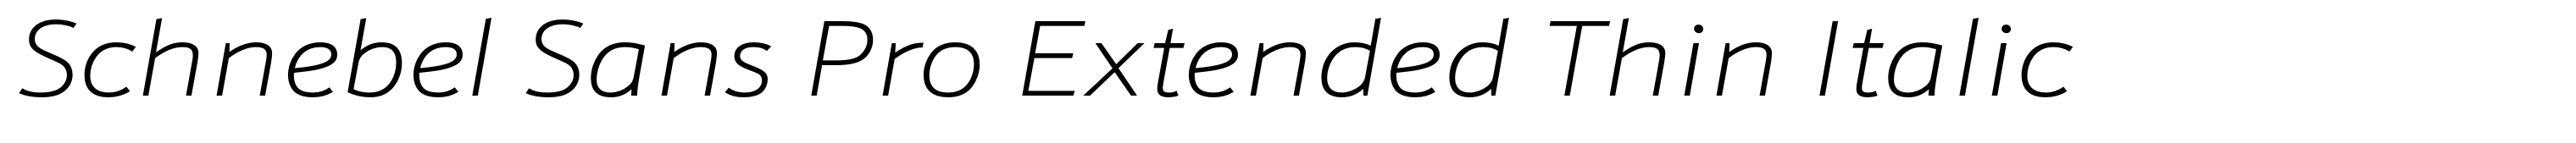 Schnebel Sans Pro Extended Thin Italic